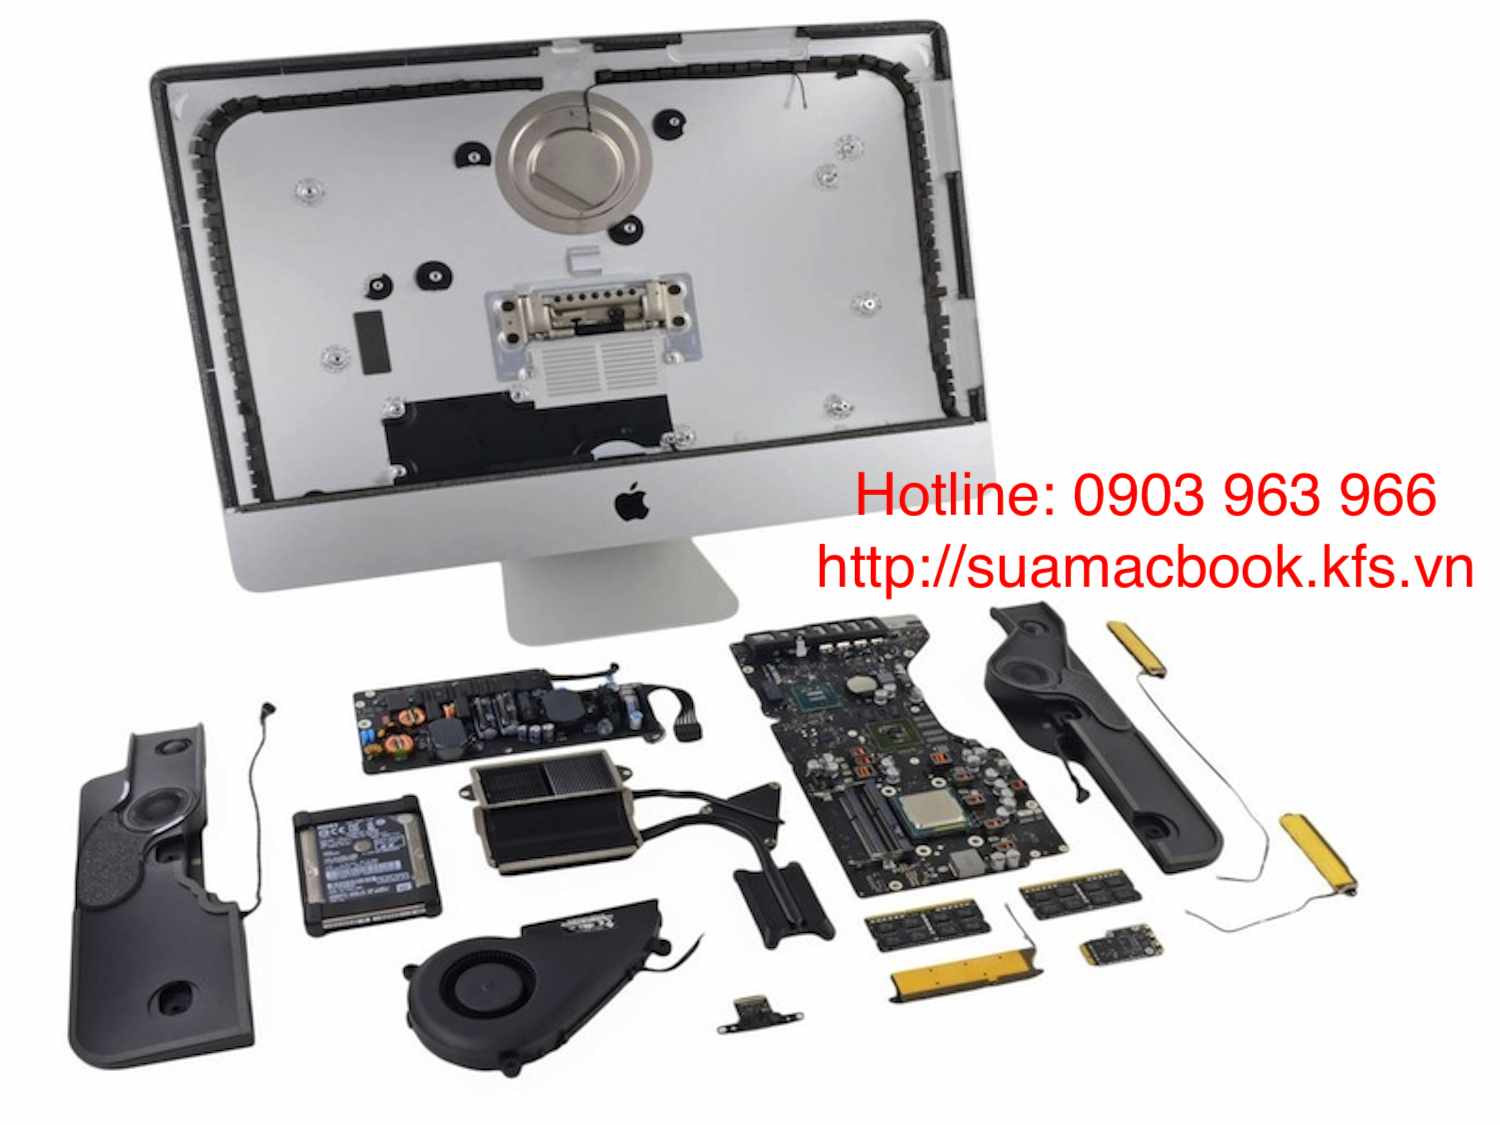 iMac-Repairs-by-Certified-Techs